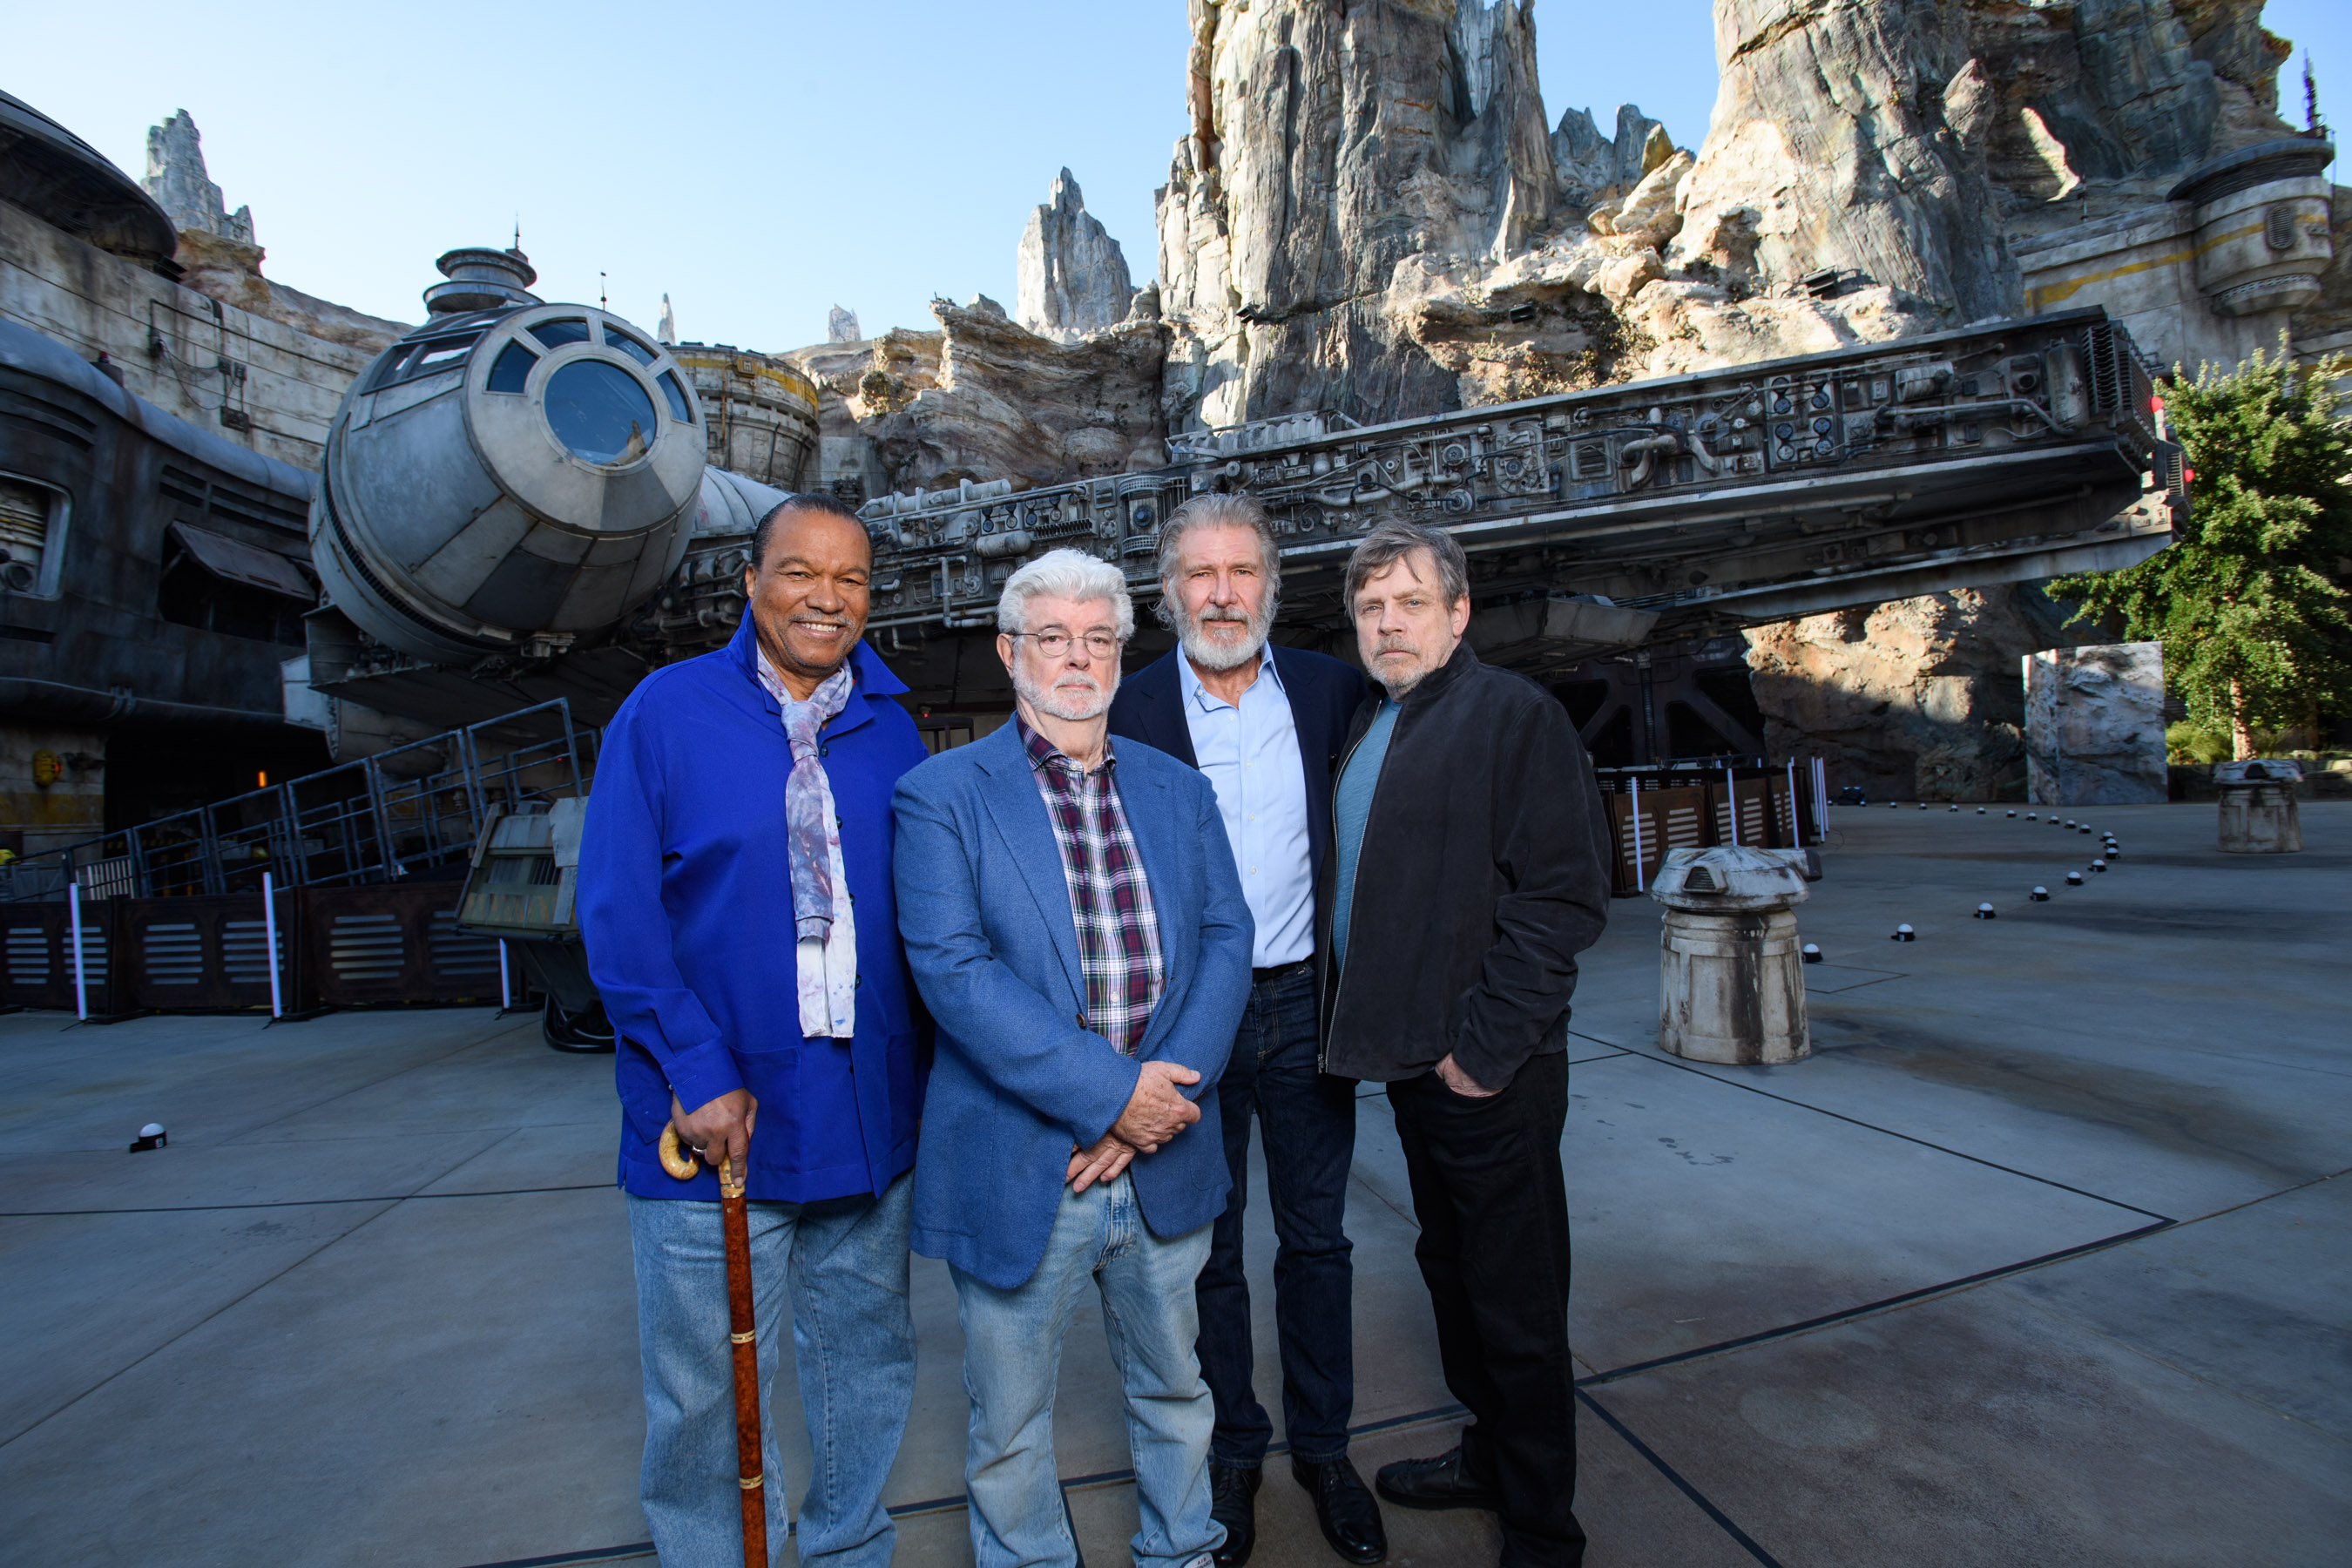 Star Wars Actors Tour Star Wars: Galaxy’s Edge at Disneyland Park Ahead of Opening